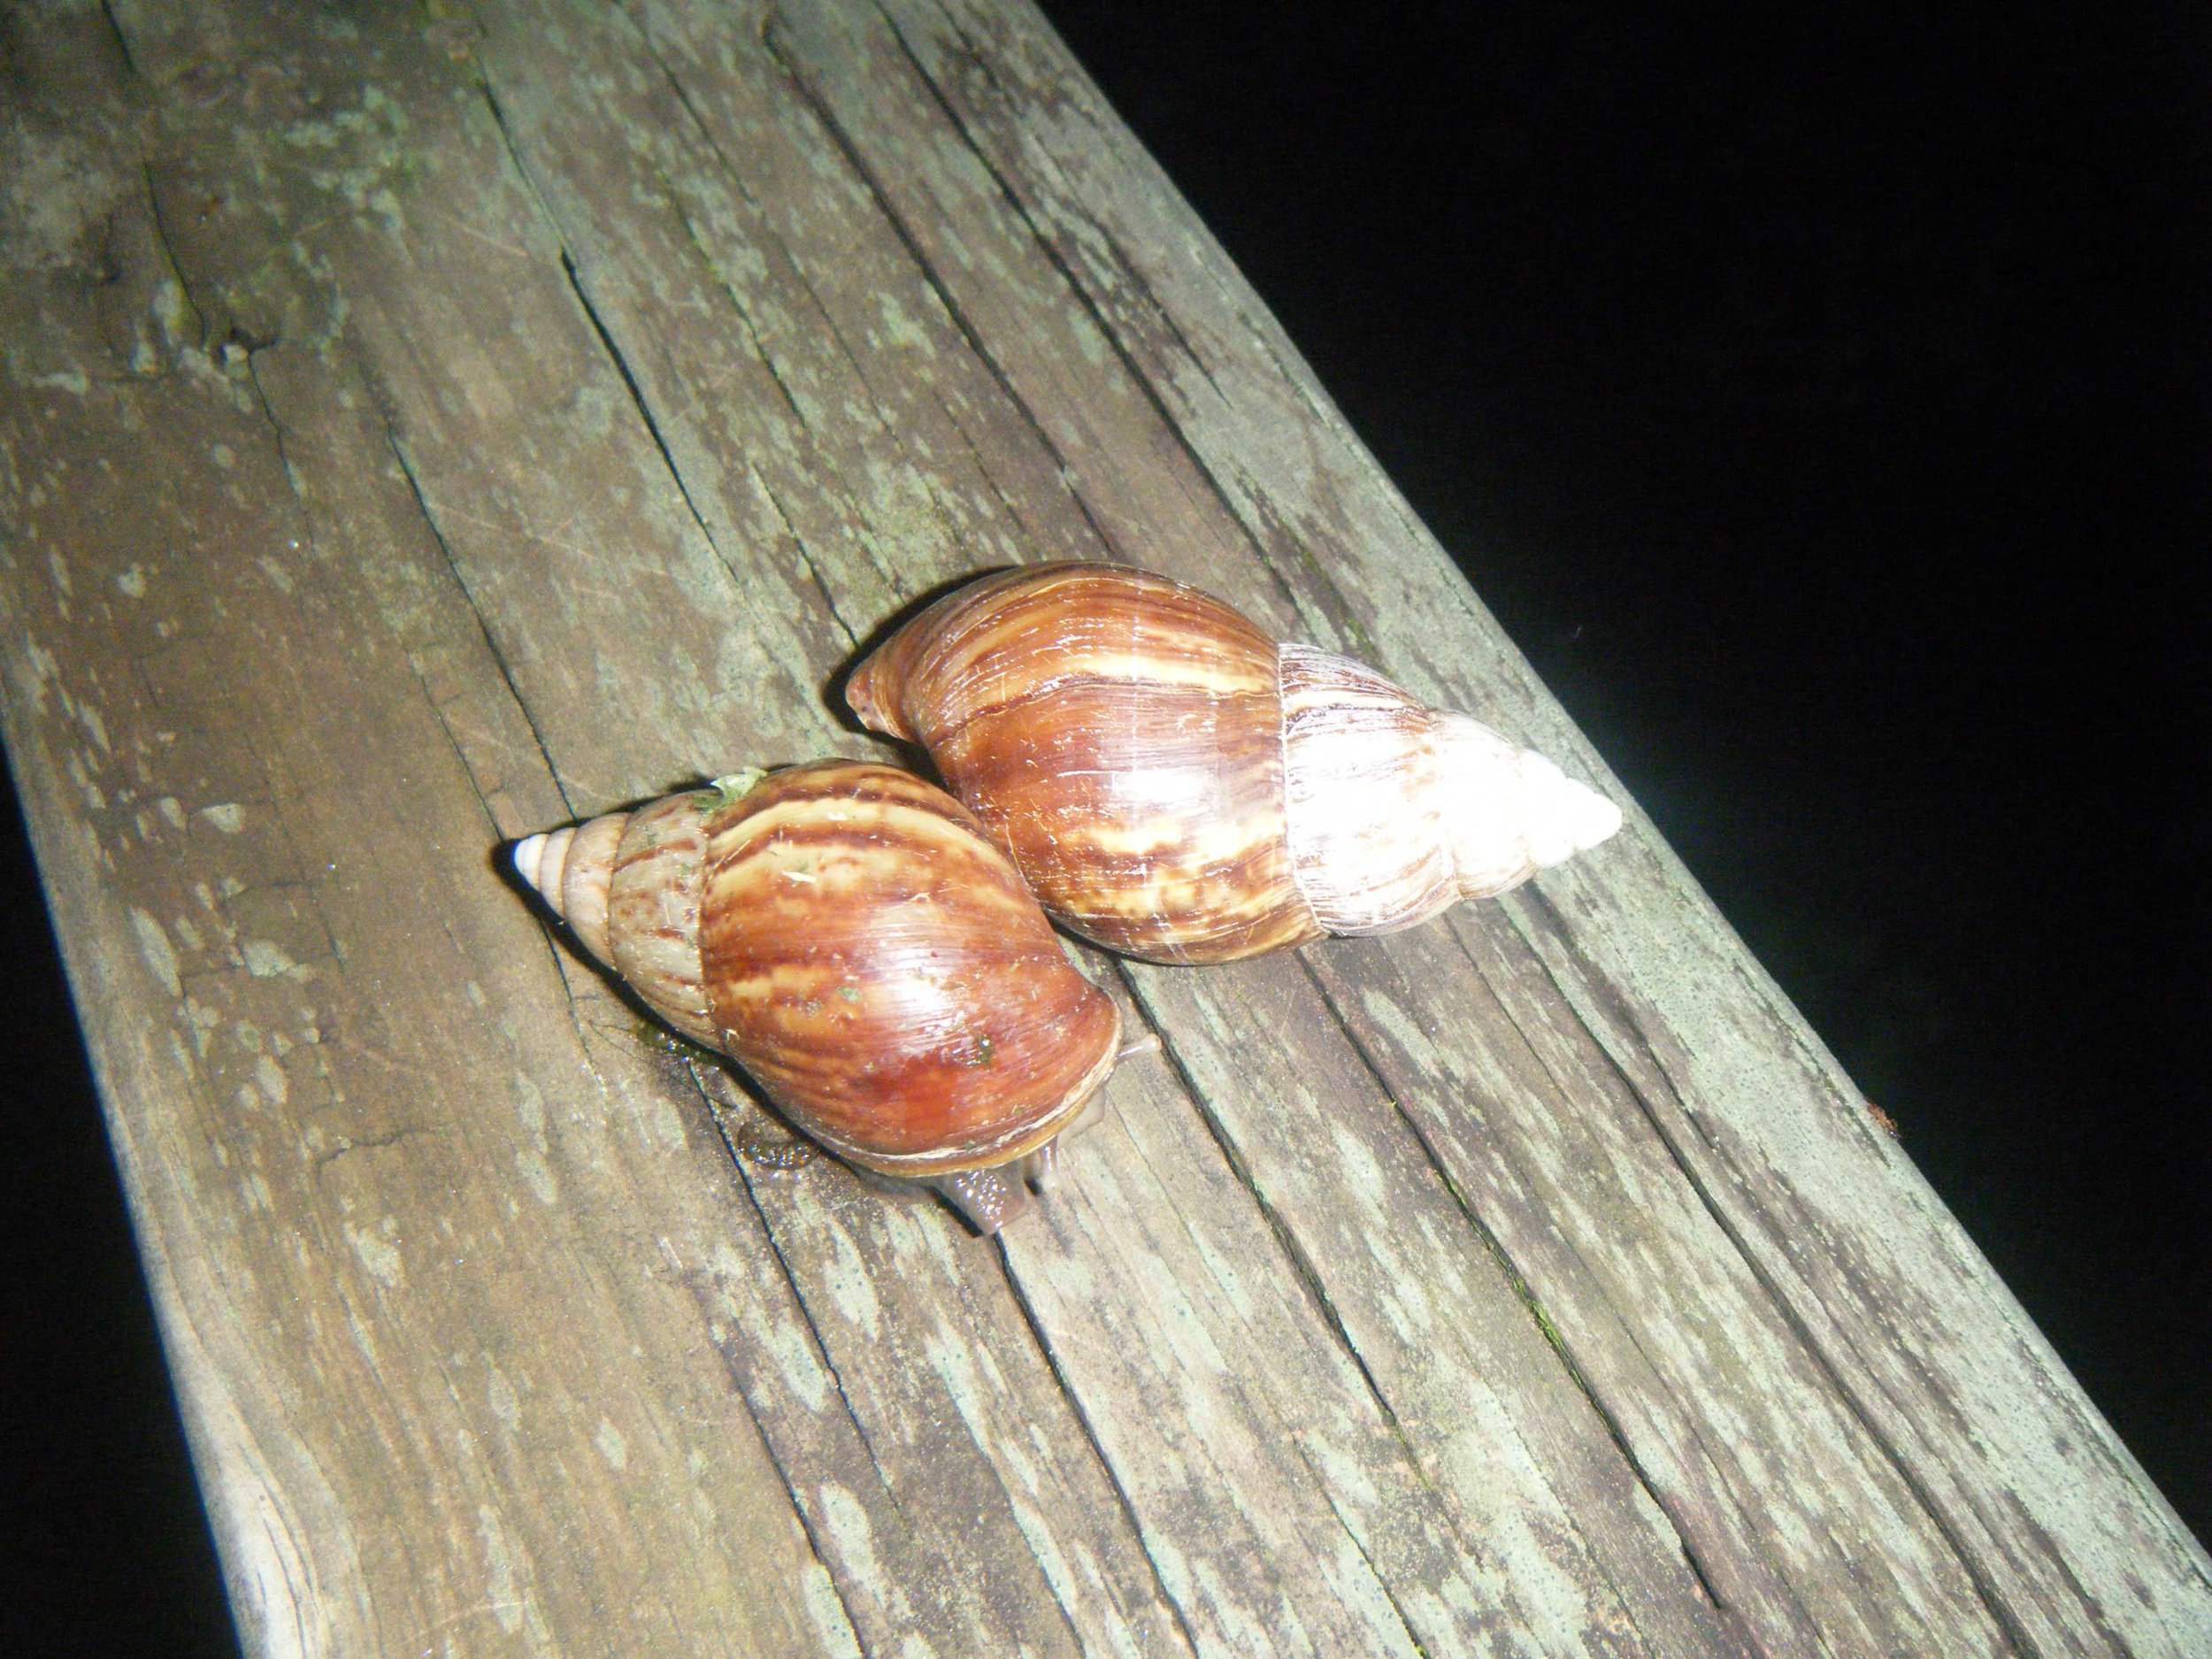 night snail action.jpg